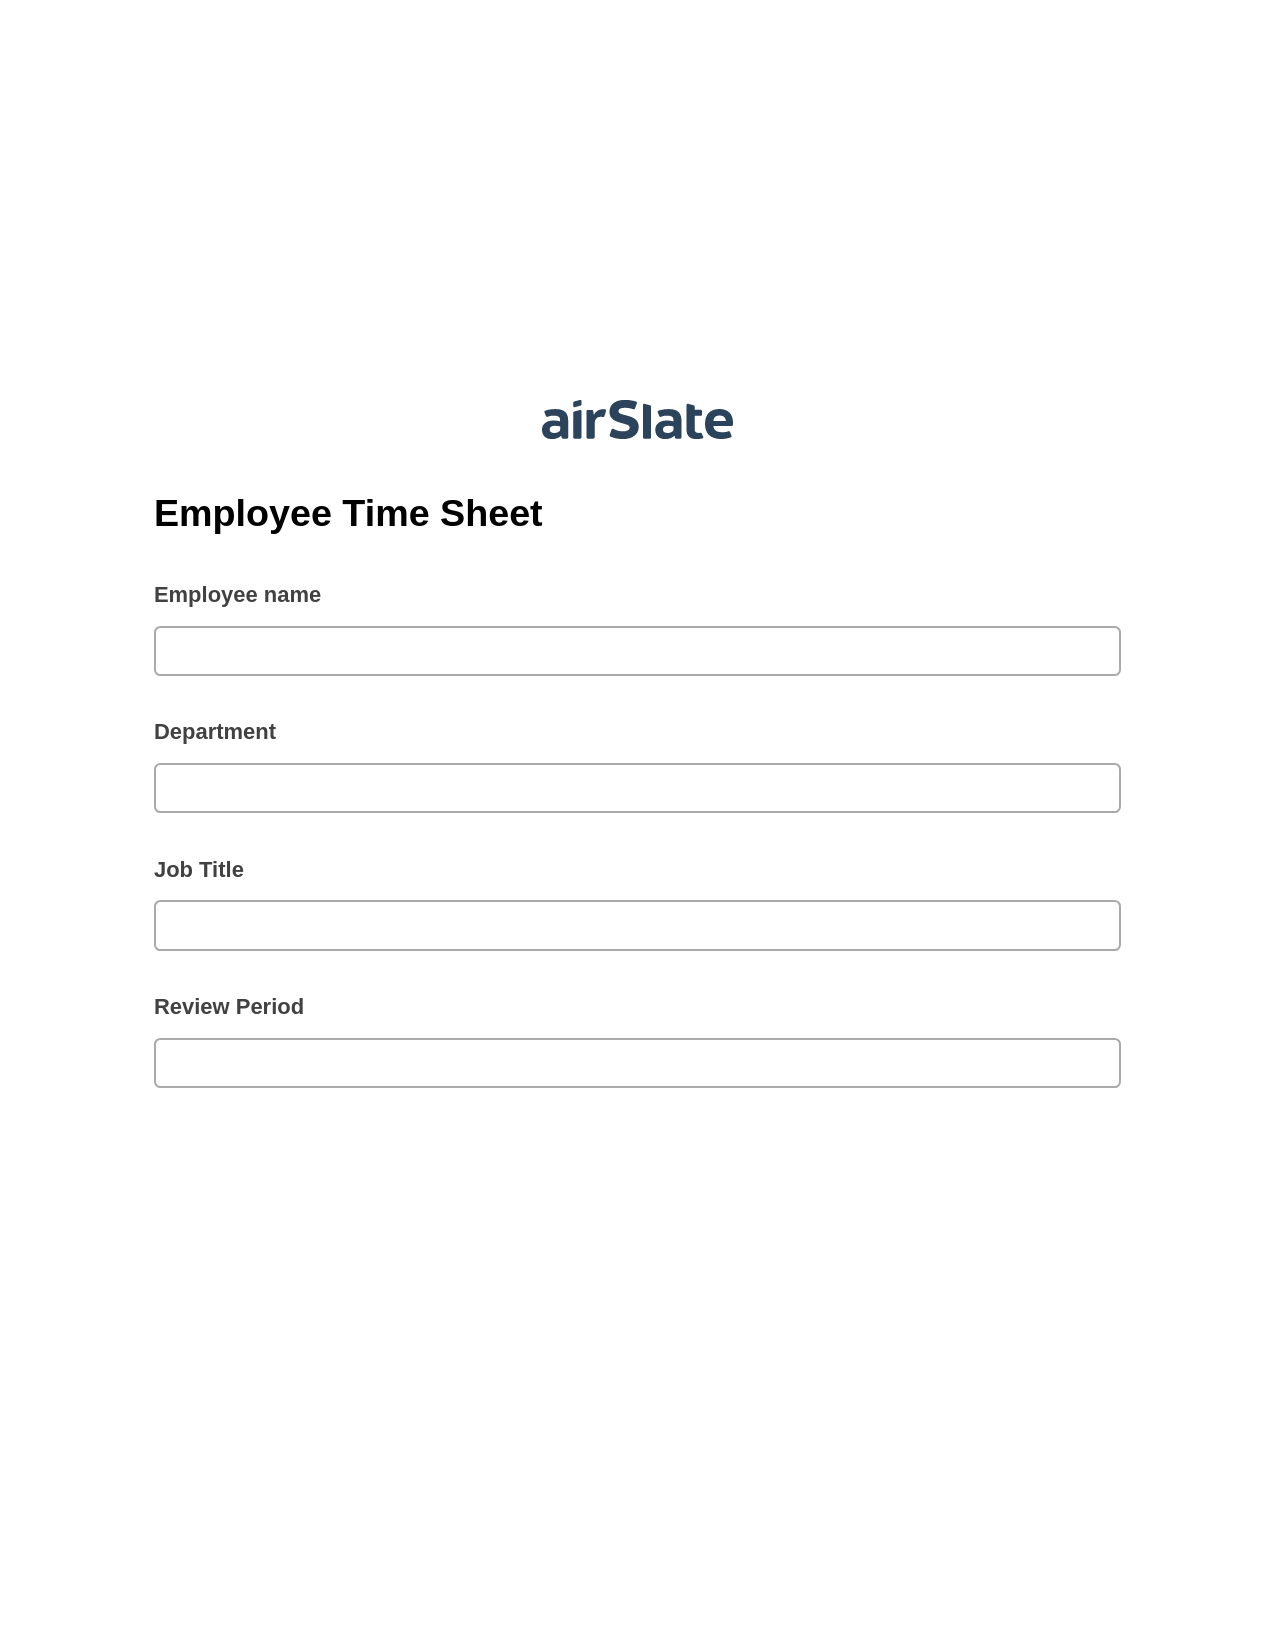 Multirole Employee Time Sheet Pre-fill from Litmos bot, Create slate addon, Archive to OneDrive Bot